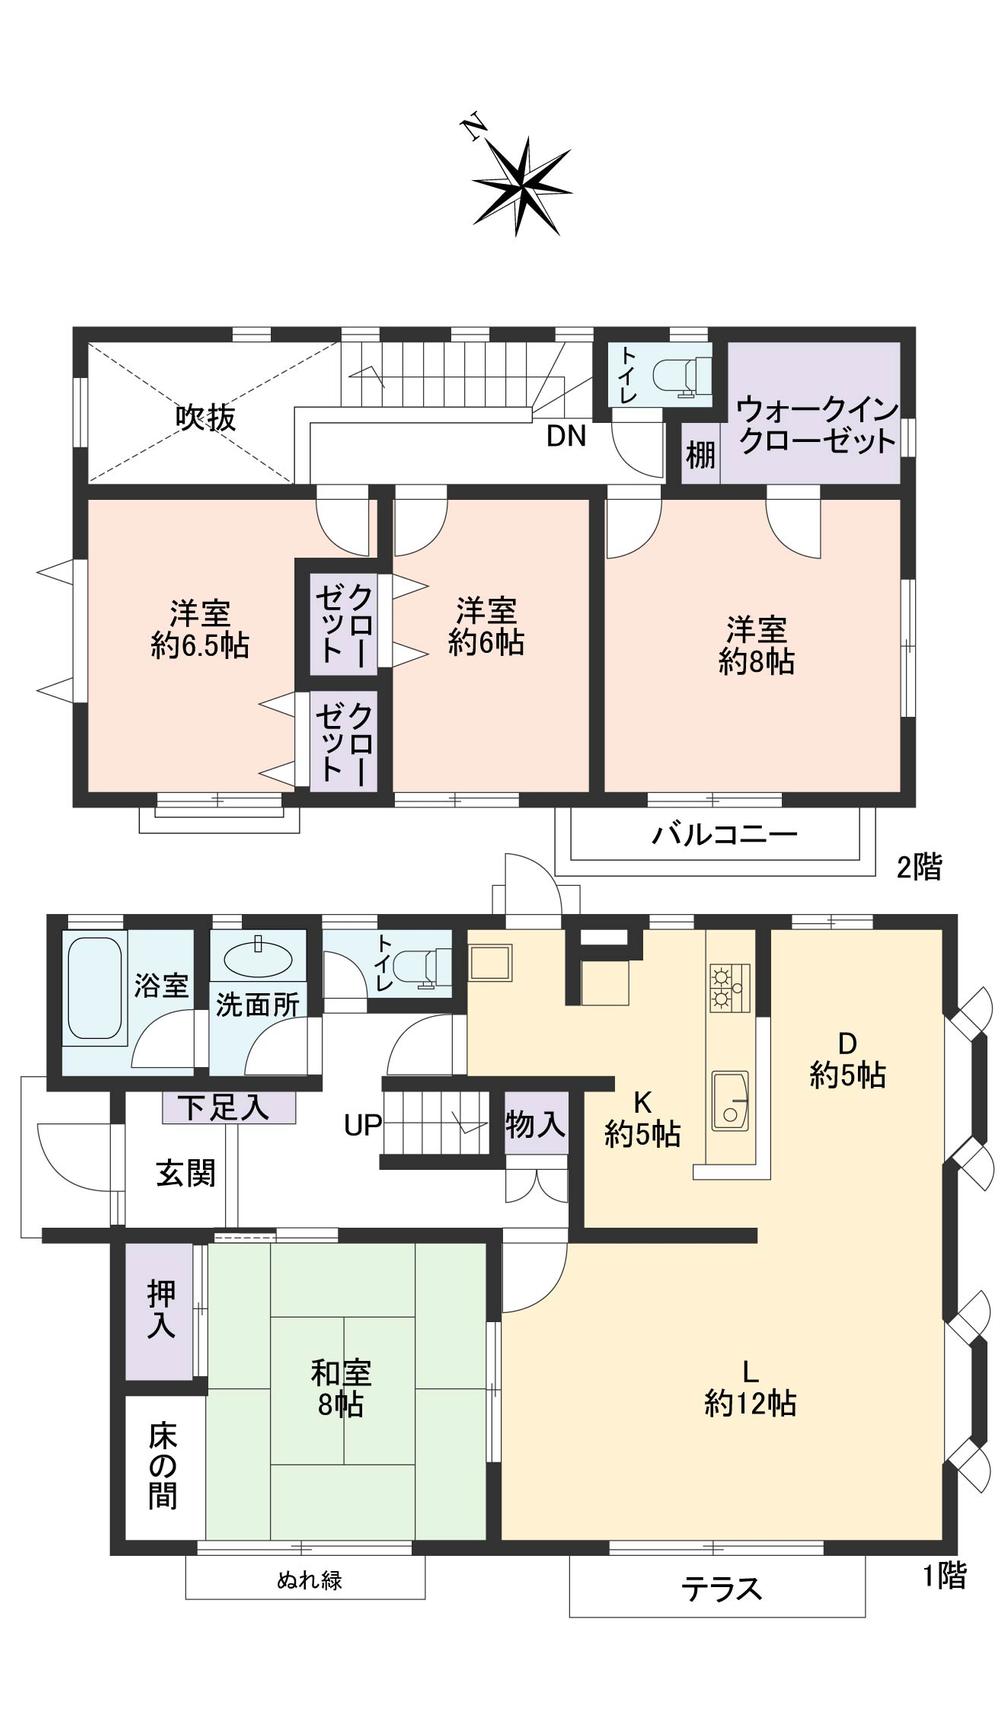 Floor plan. 25,500,000 yen, 4LDK, Land area 228.19 sq m , Building area 123.79 sq m